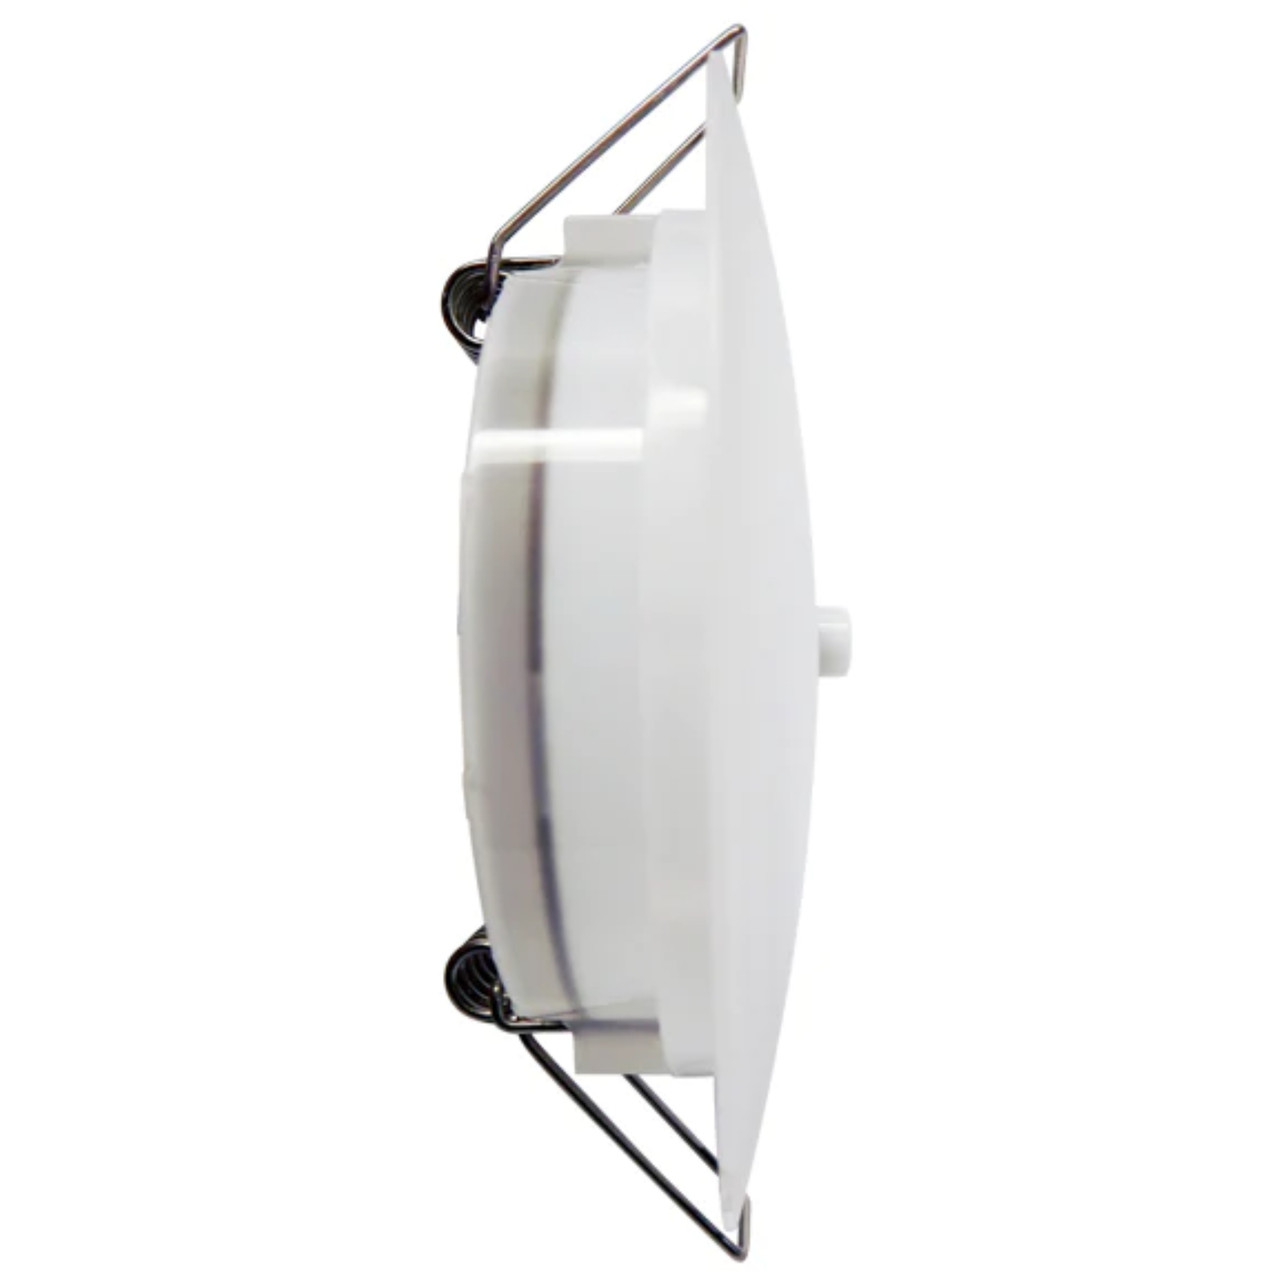 Tecniq New OEM 4.5" Spring Mounted Cool White Premium Dome Light, E26-WP00-1